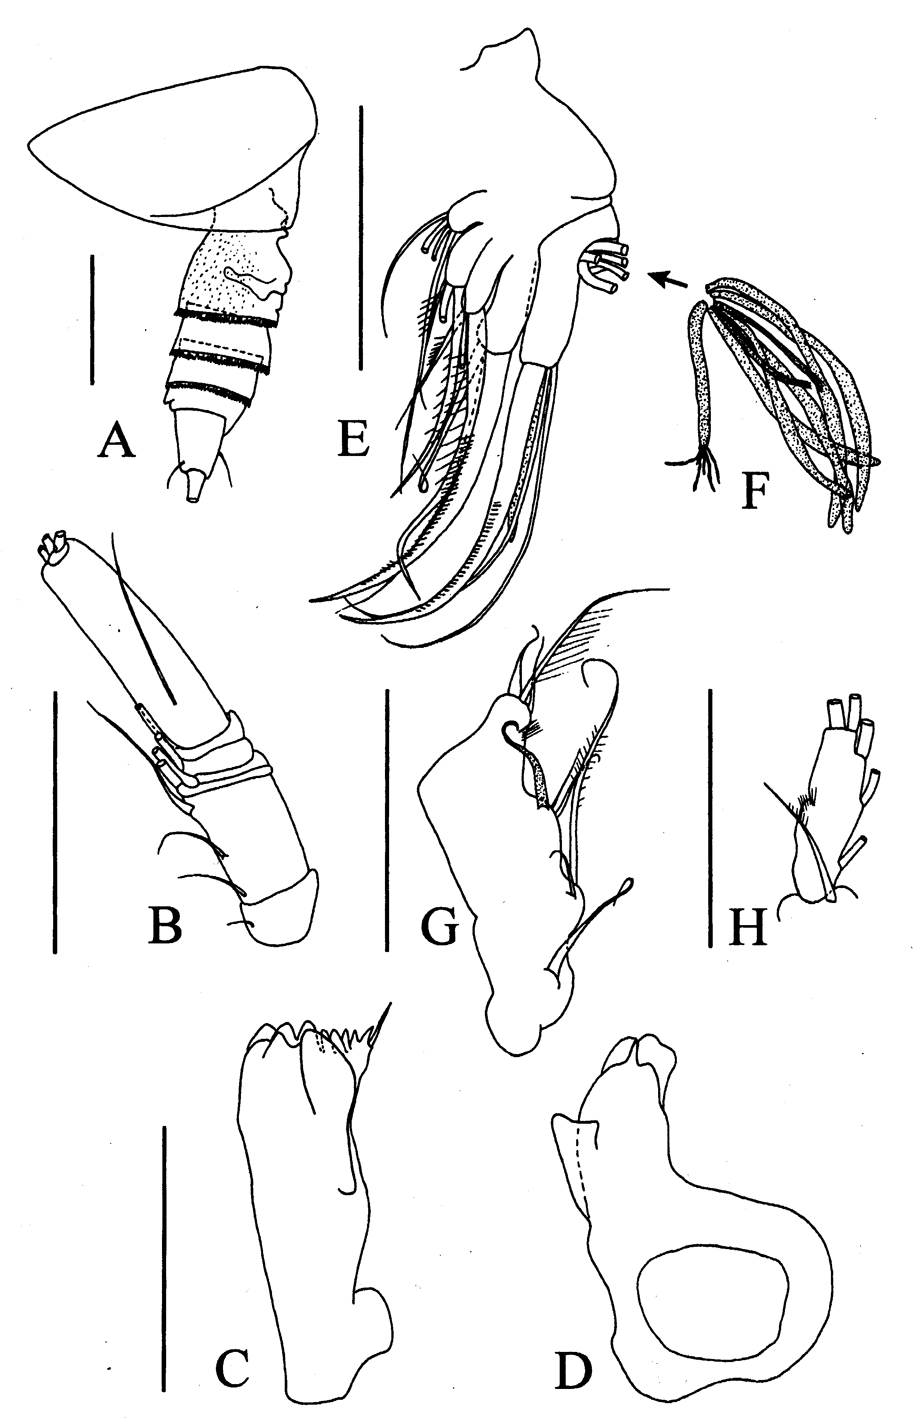 Species Byrathis macrocephalon - Plate 1 of morphological figures